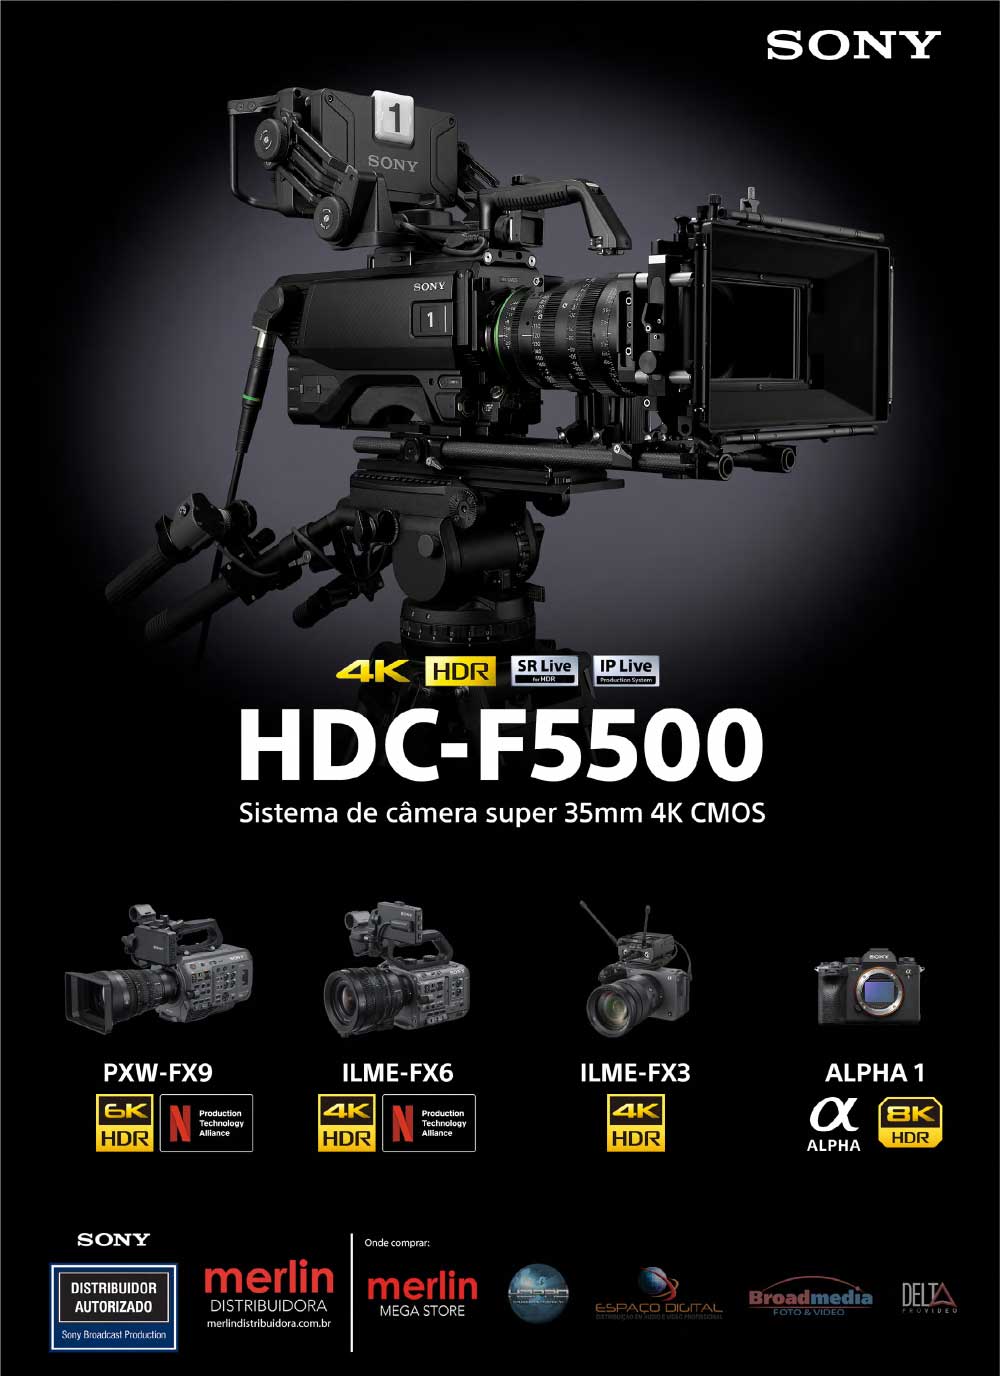 FOX, CBS and ESPN Deploy Sony Electronics' New HDC-F5500 Super